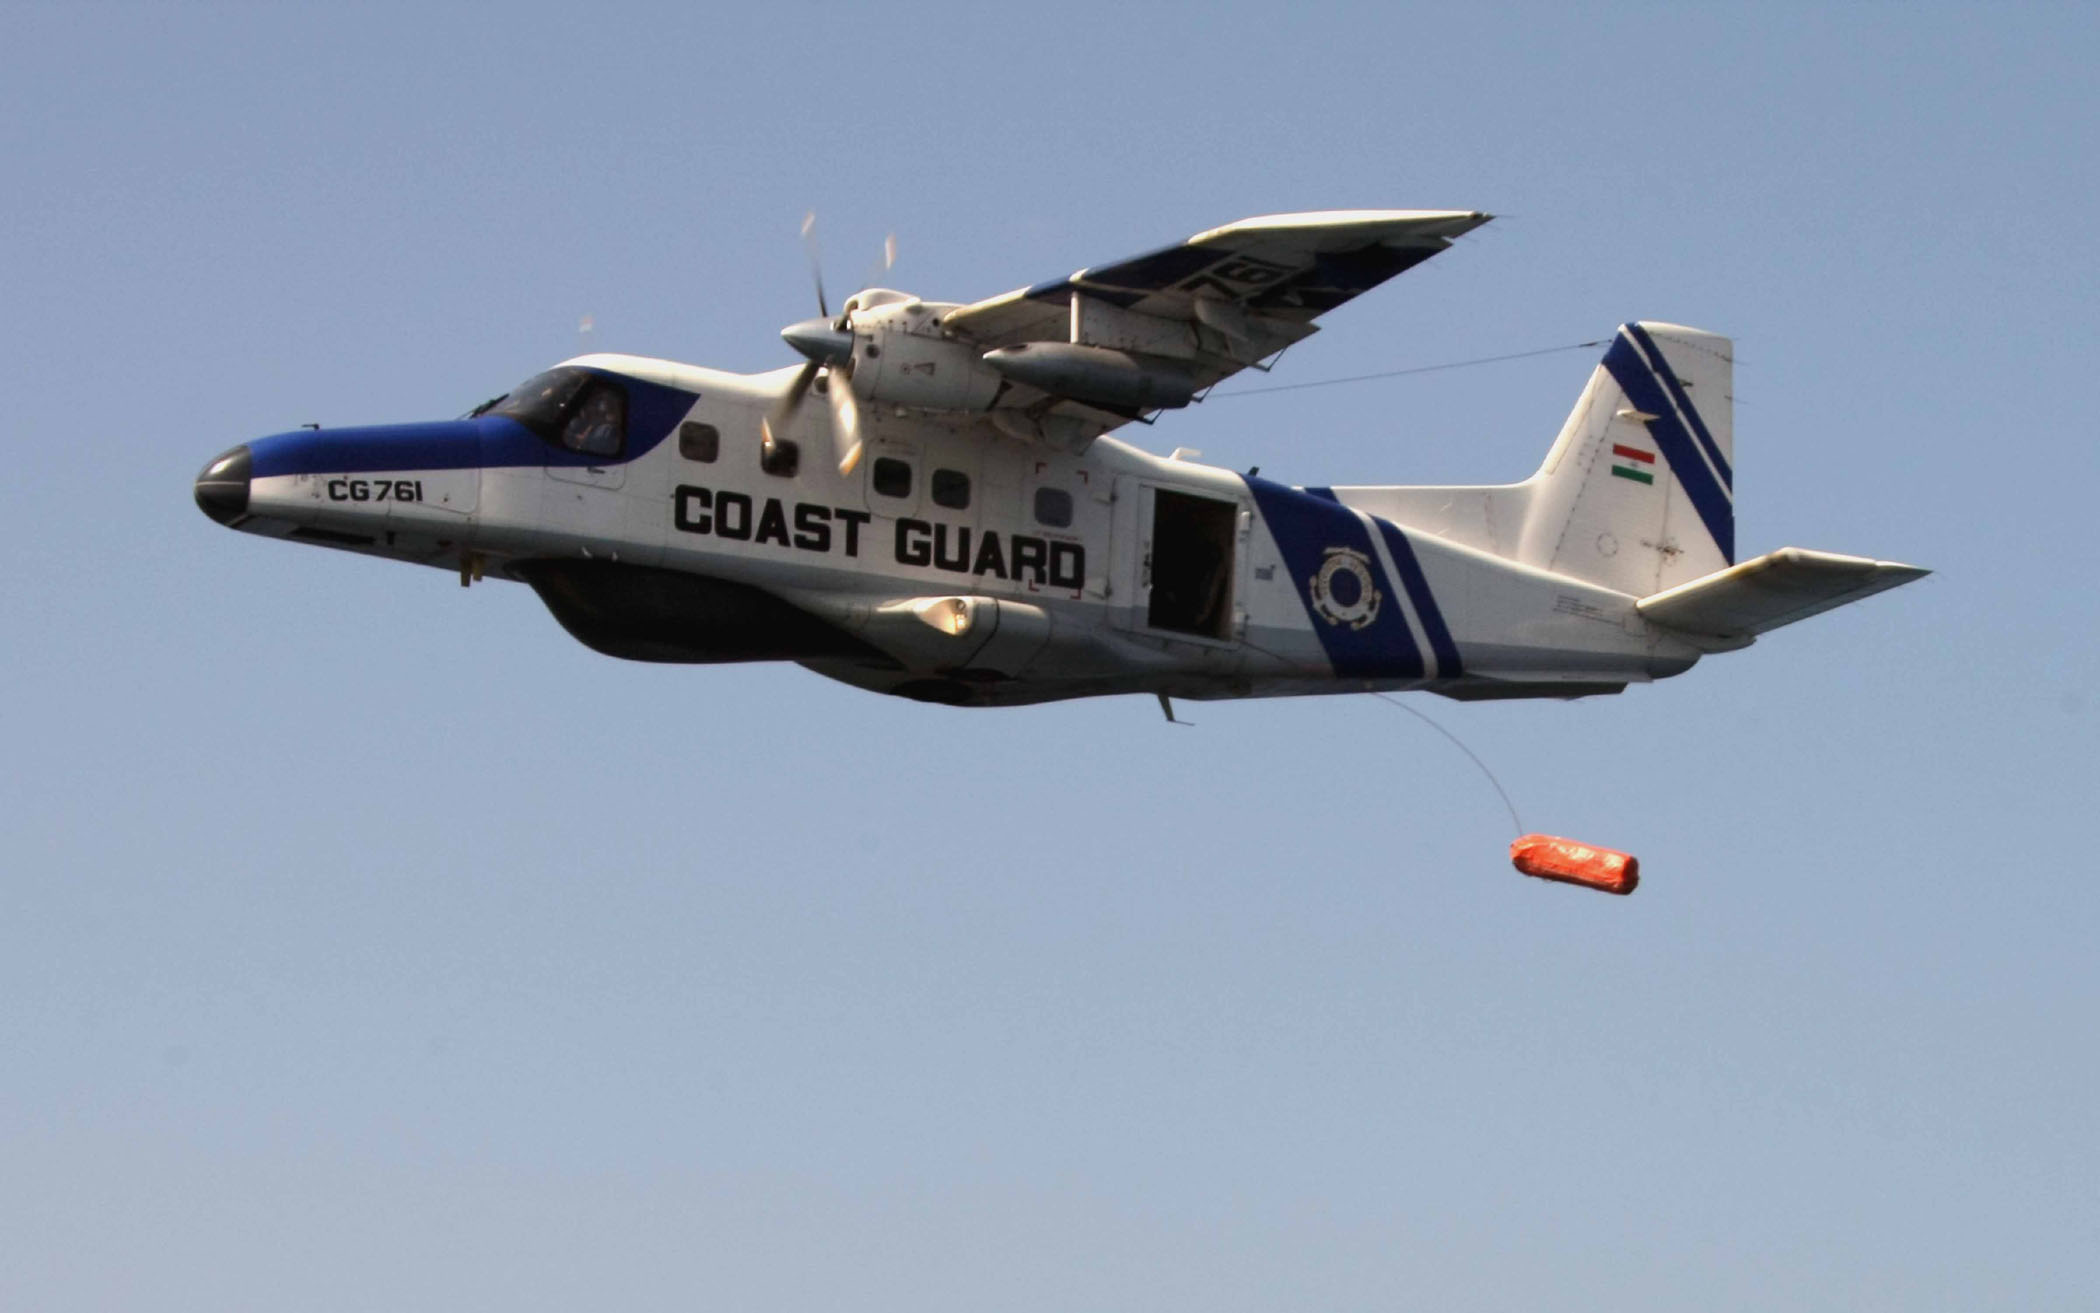 Dornier_Do-228_of_the_Indian_Coast_Guard_dropping_a_life_raft.jpg